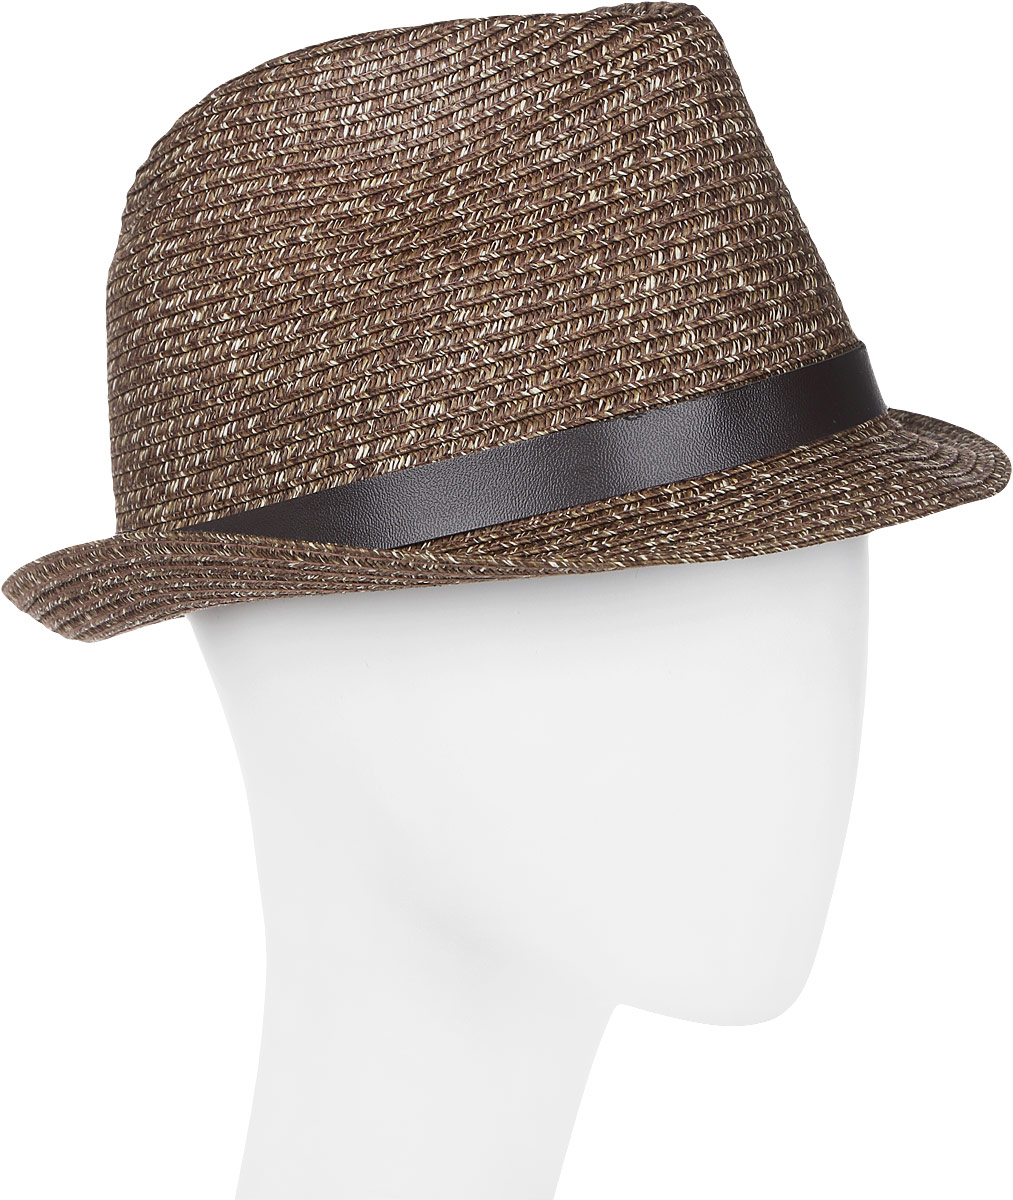 Шляпа мужская Canoe Samuel, цвет: коричневый. 1964499. Размер 56